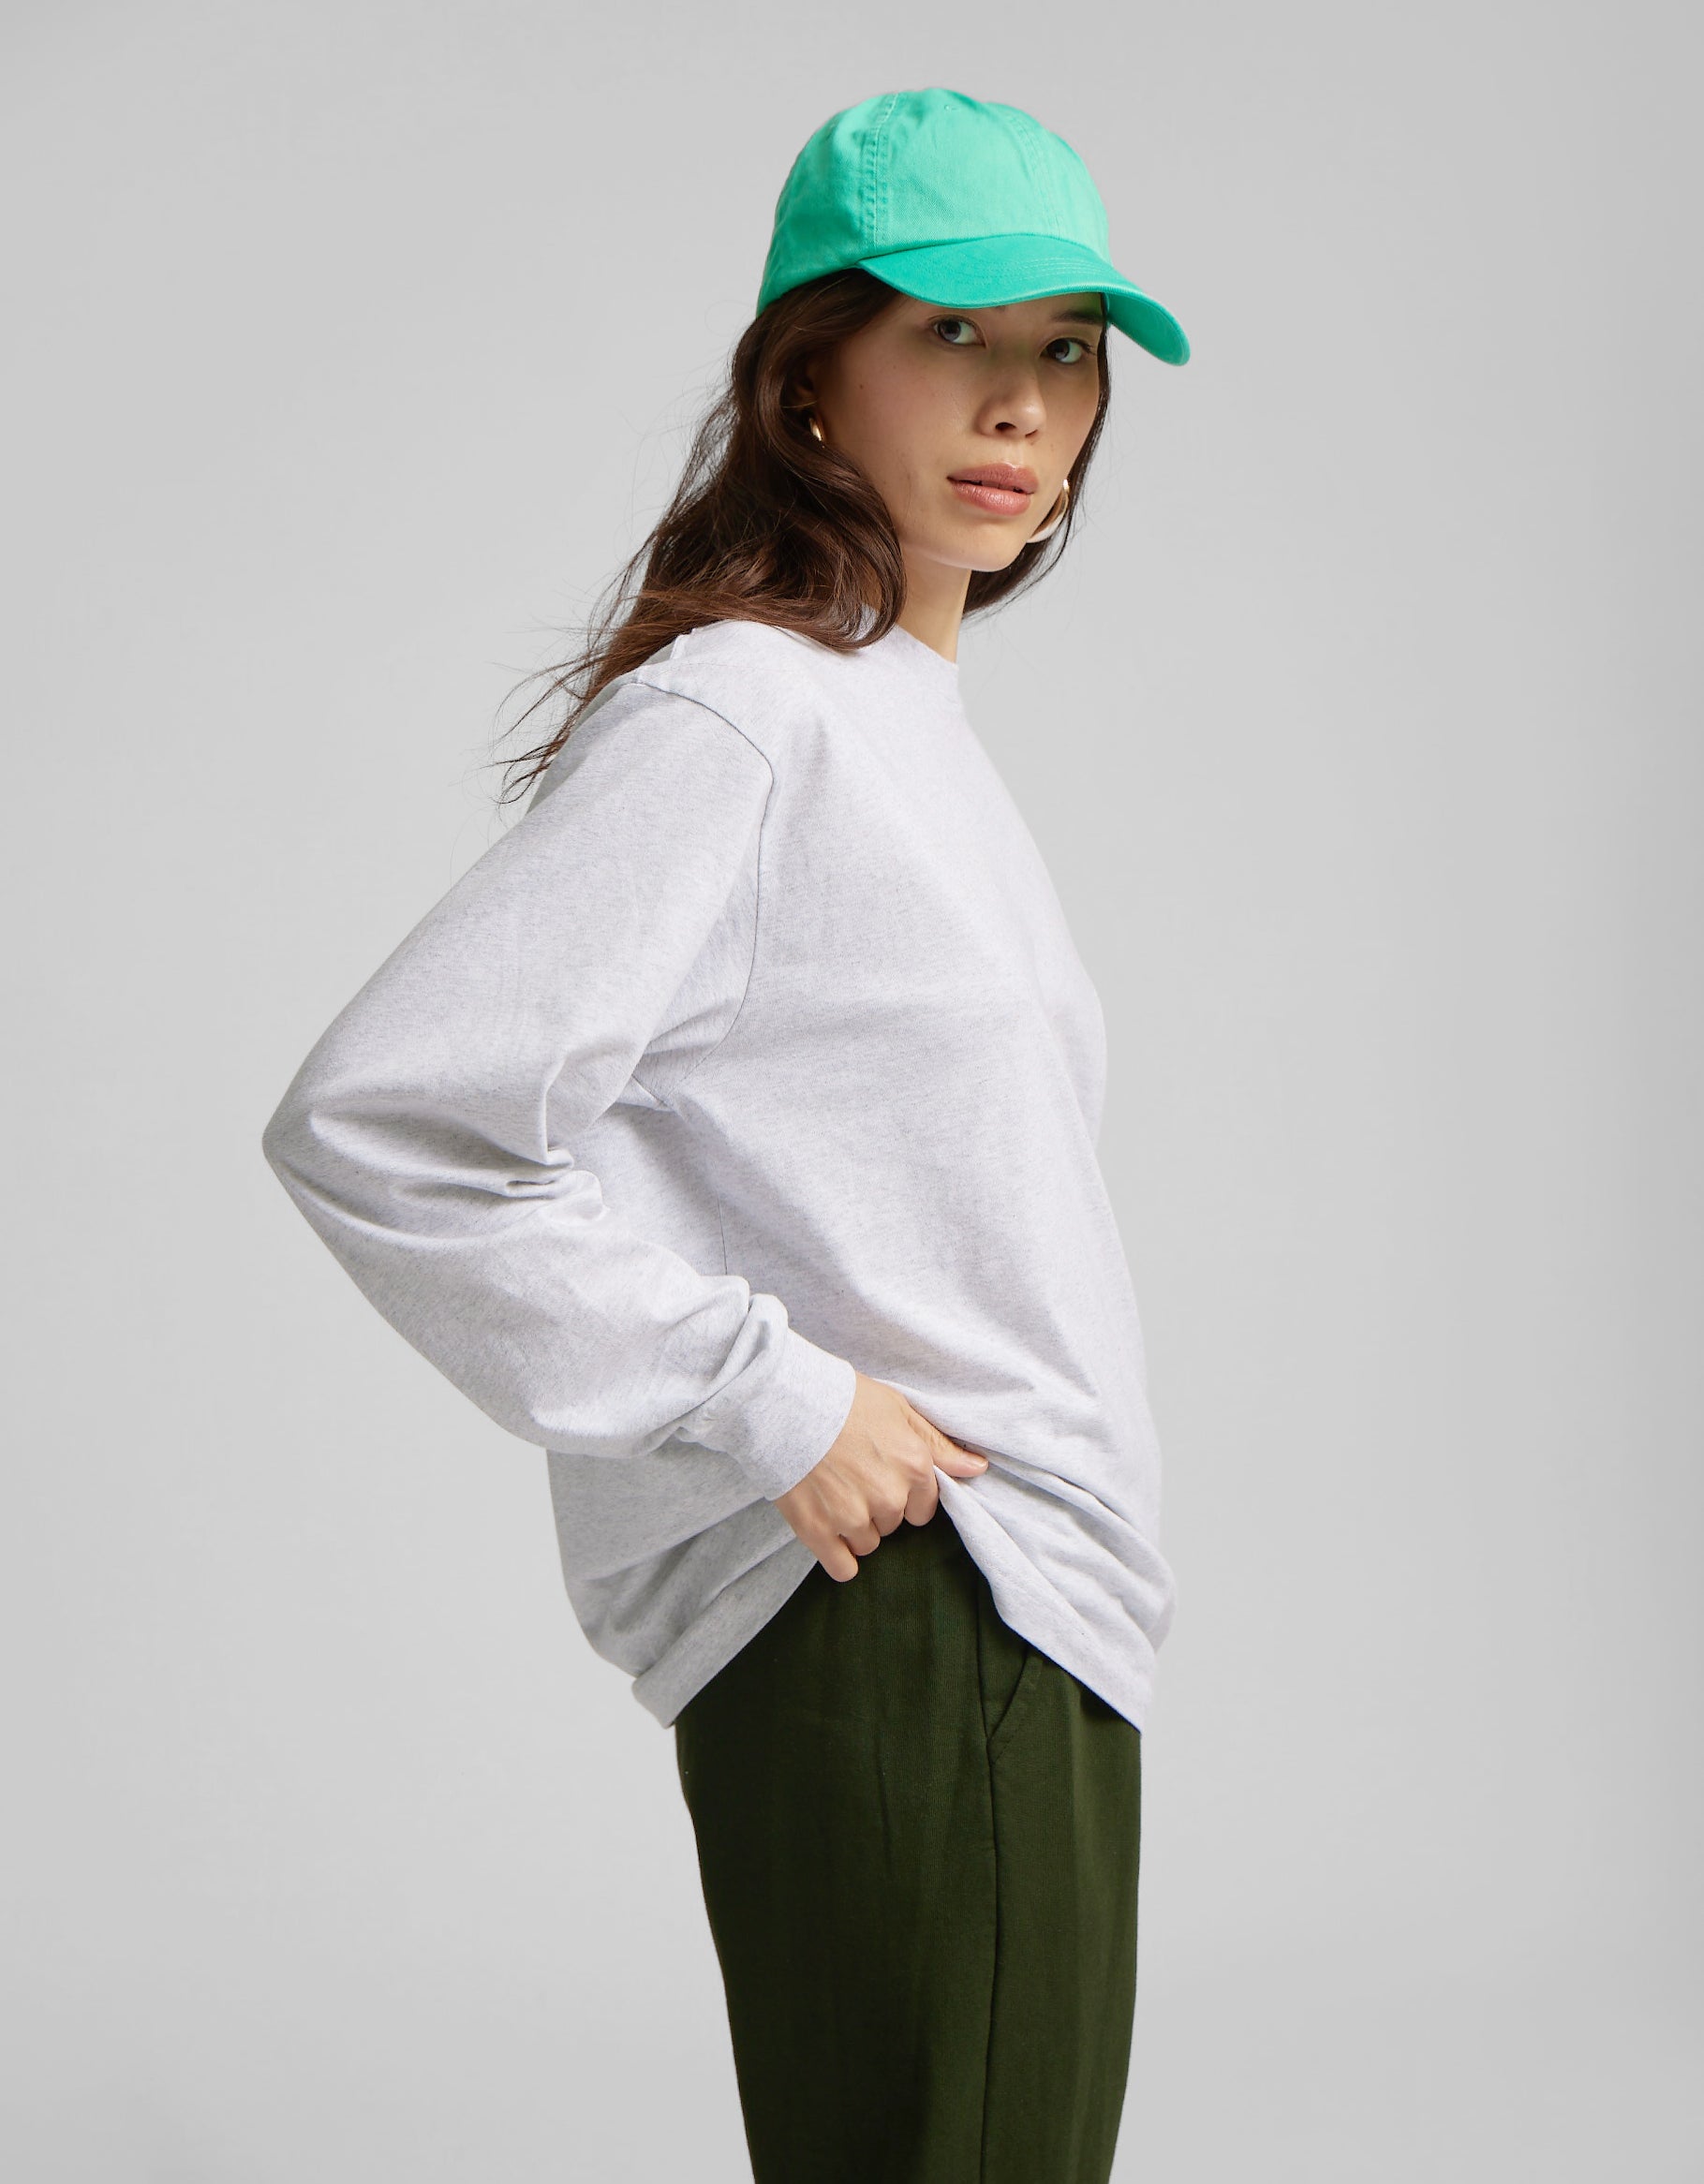 Oversized Organic LS T-shirt - Pine Green